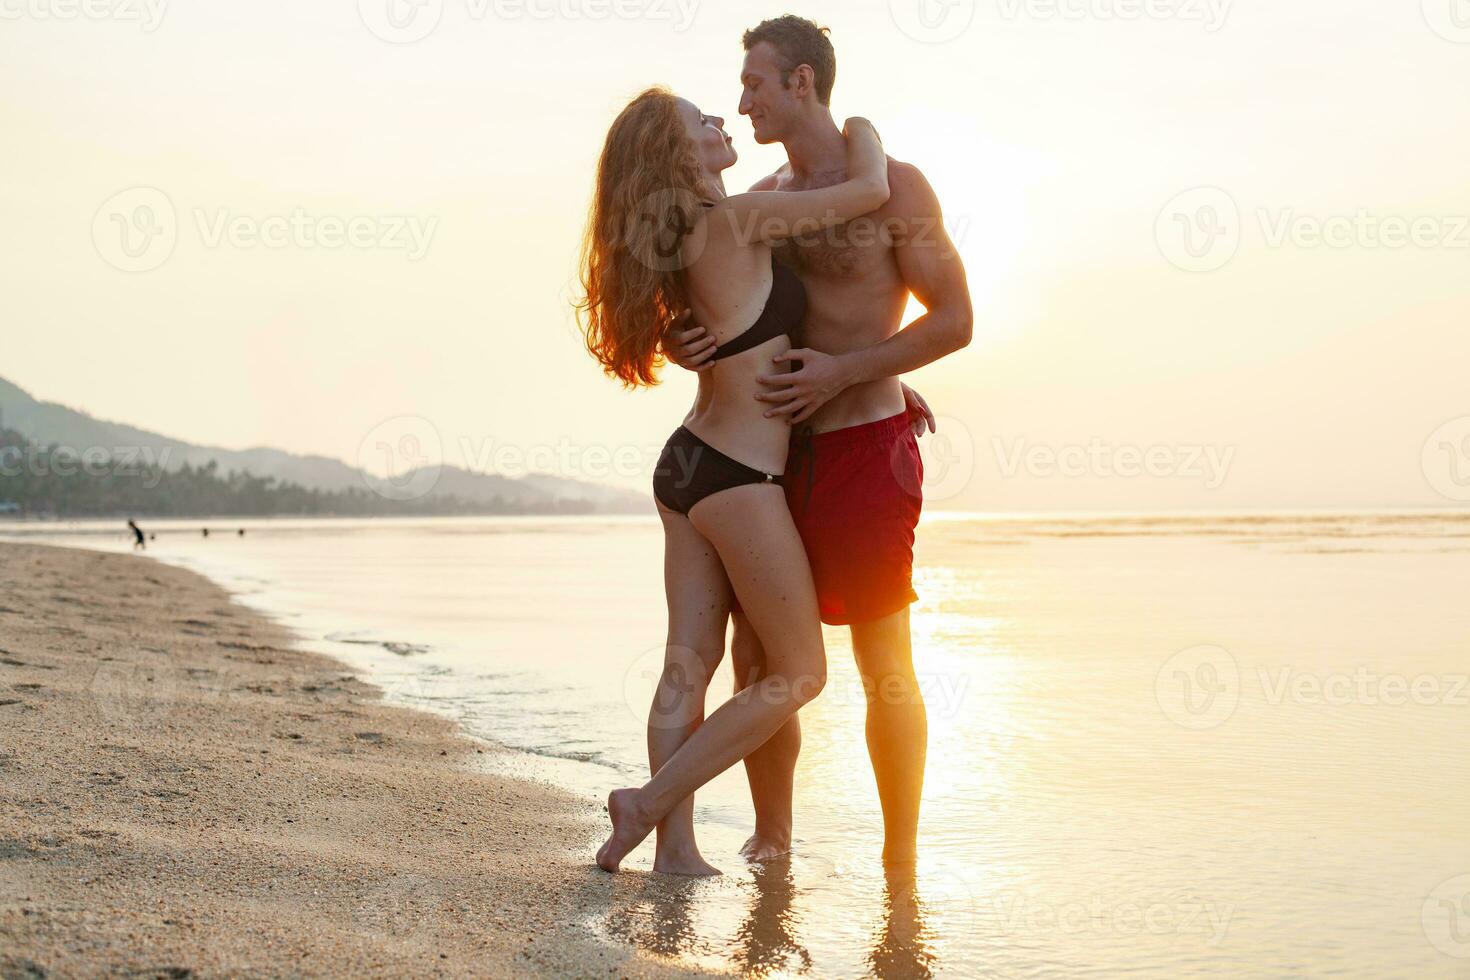 jong sexy romantisch paar in liefde gelukkig Aan zomer strand samen hebben pret vervelend zwemmen pakken foto